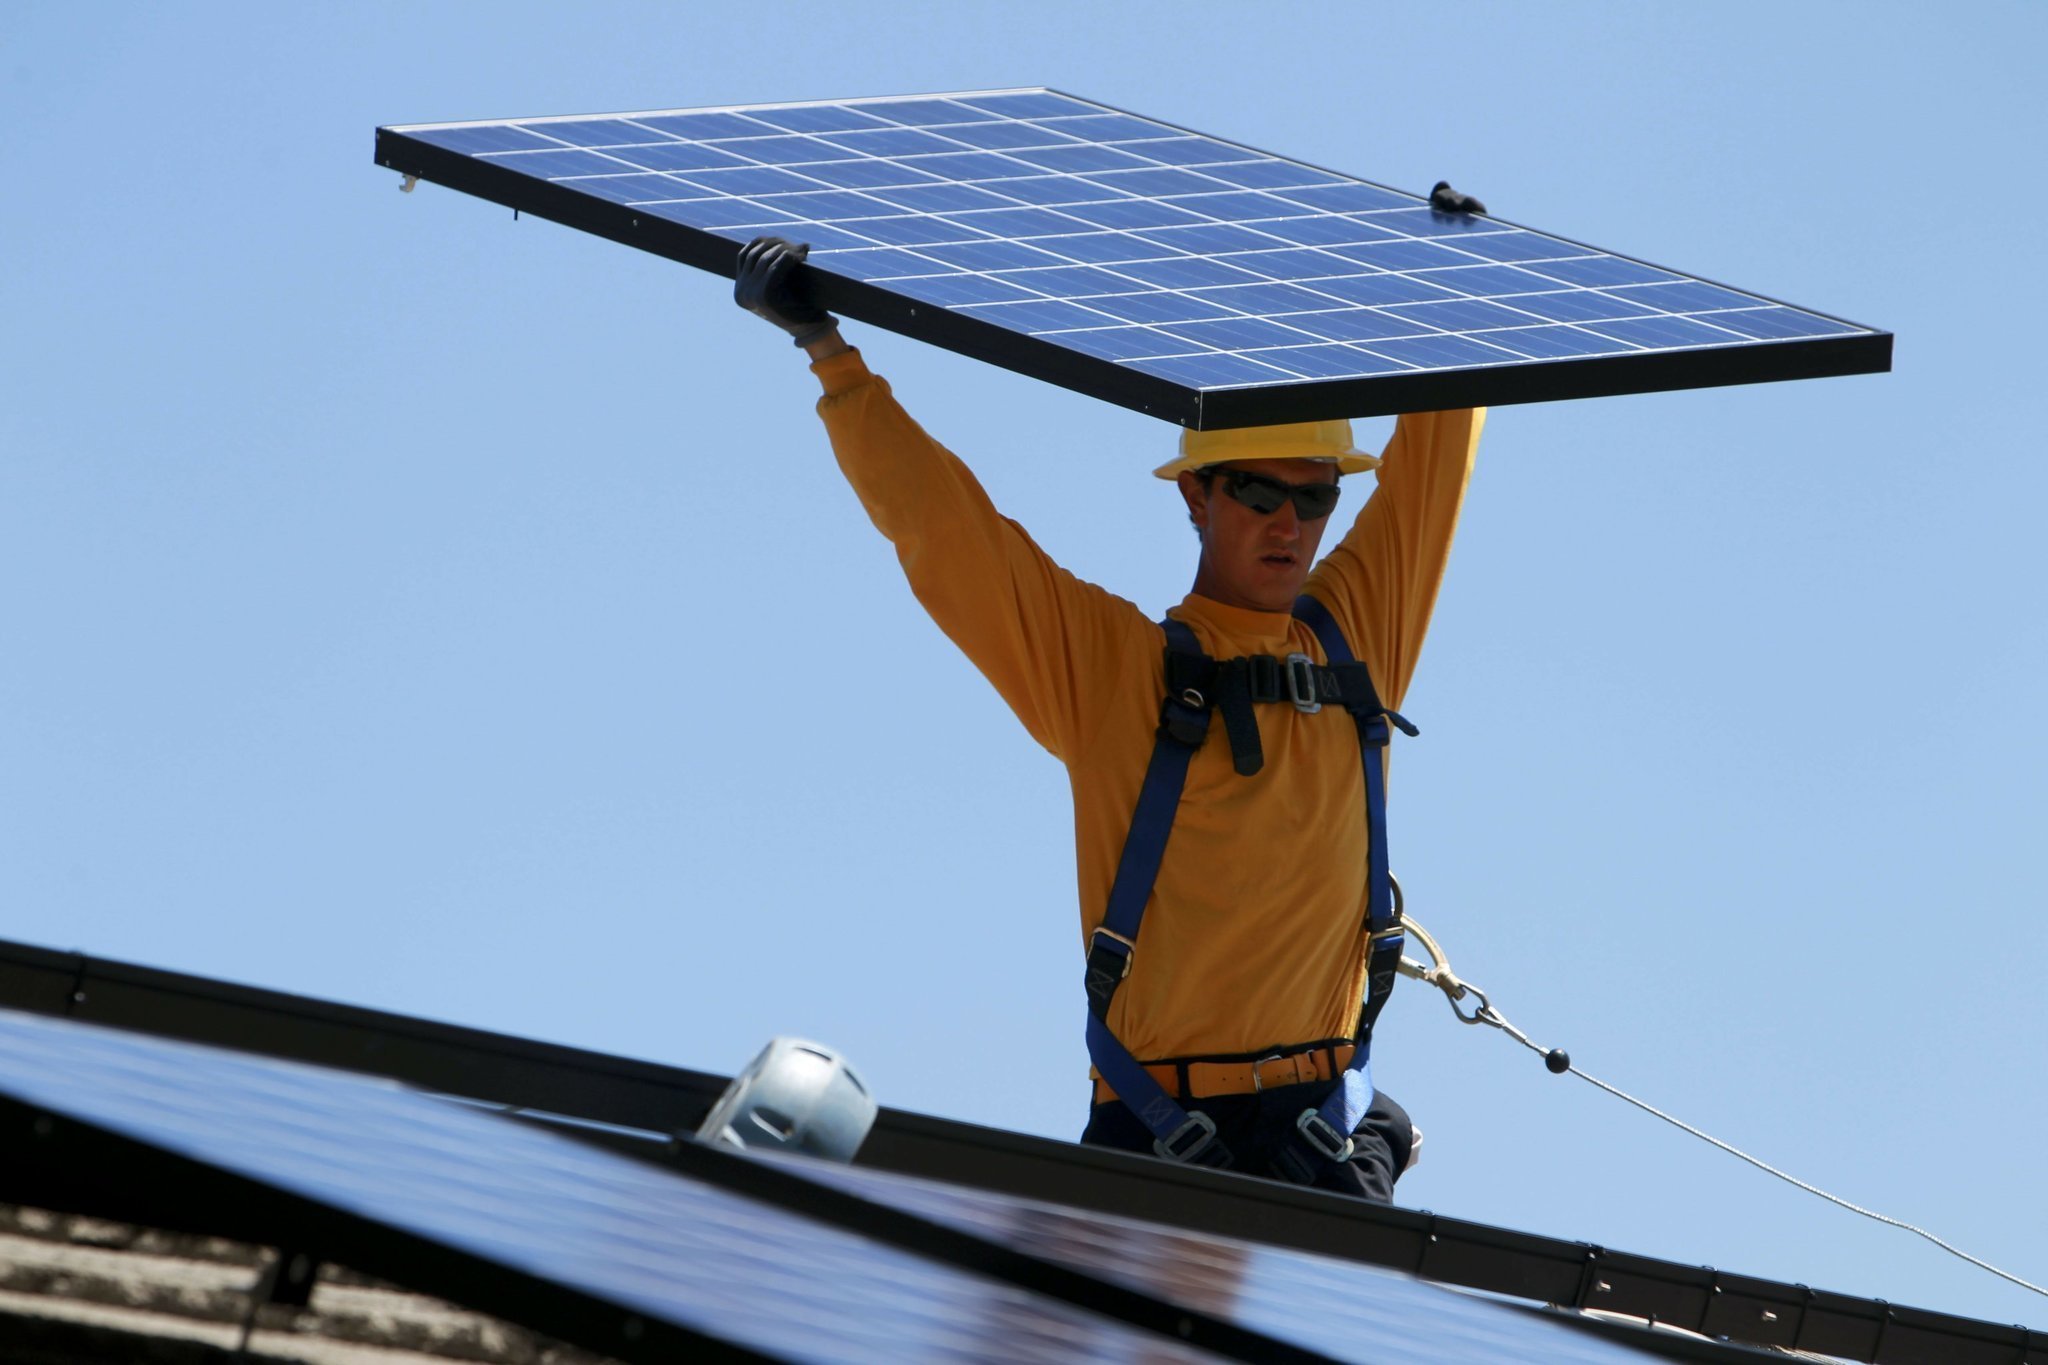 edison-electric-solar-rebates-electricrebate-californiarebates